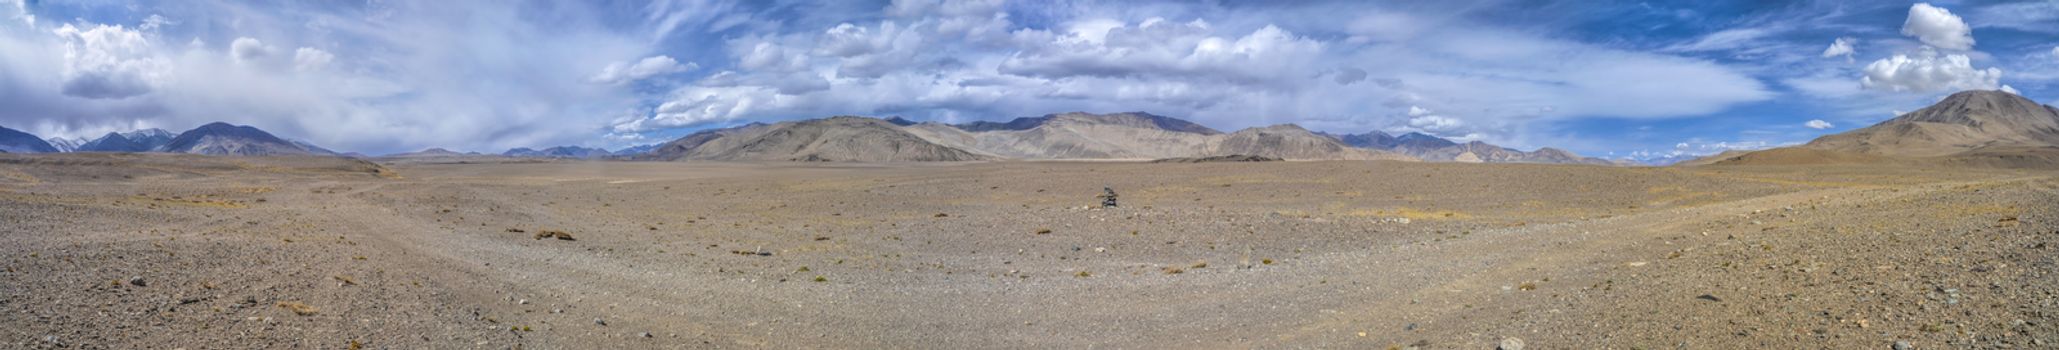 Scenic panorama of arid landscape in Tajikistan